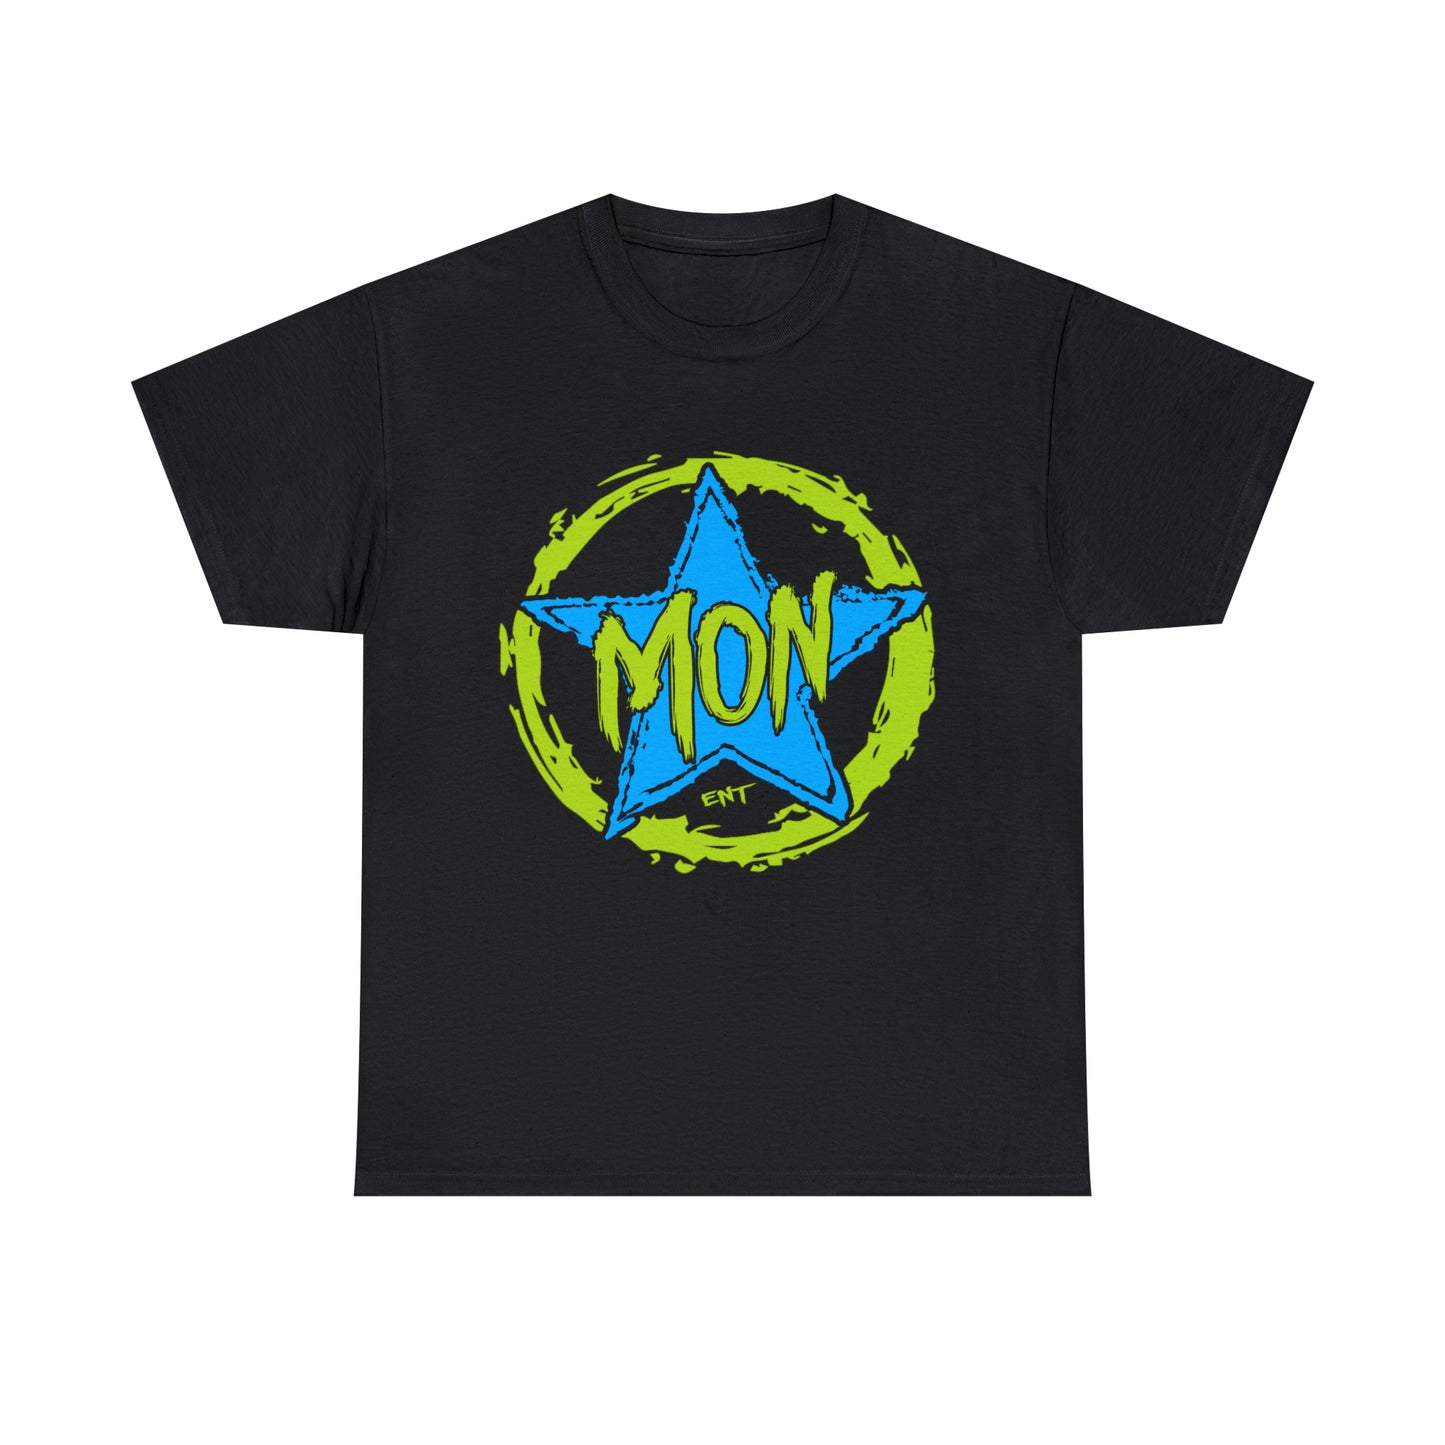 Monstar "Blue Lagoon" Variant T-Shirt